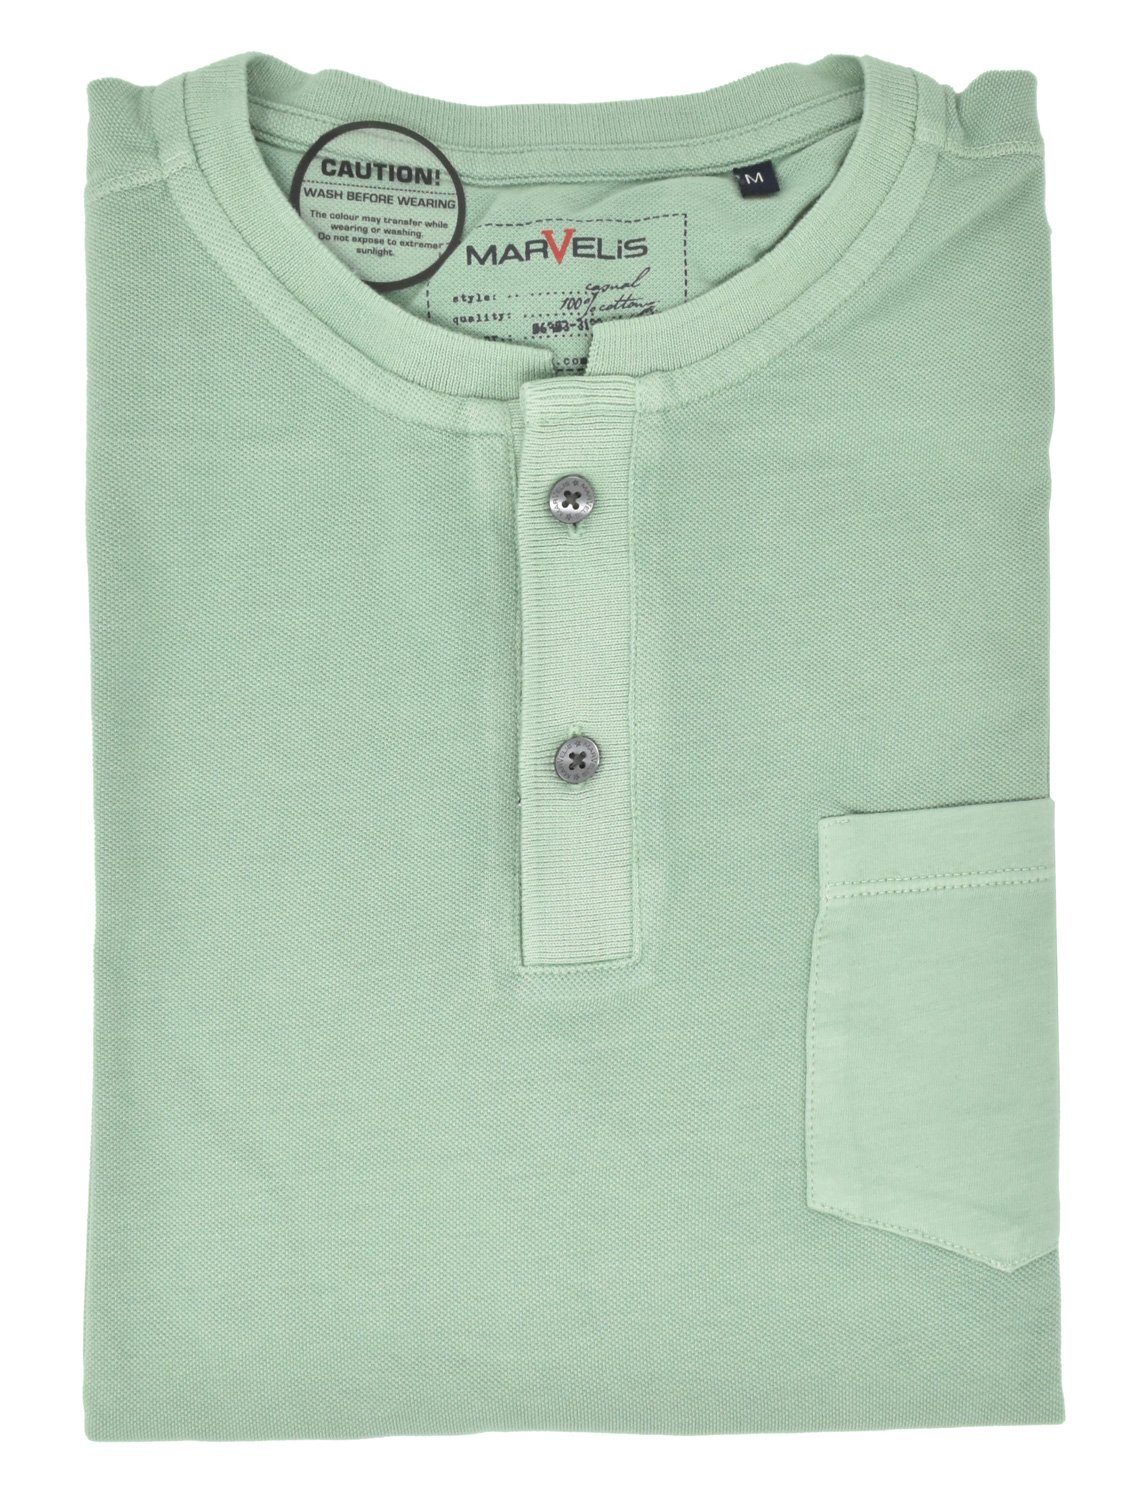 MARVELIS Poloshirt Poloshirt - Stehkragen - Grün Casual Einfarbig - Fit 